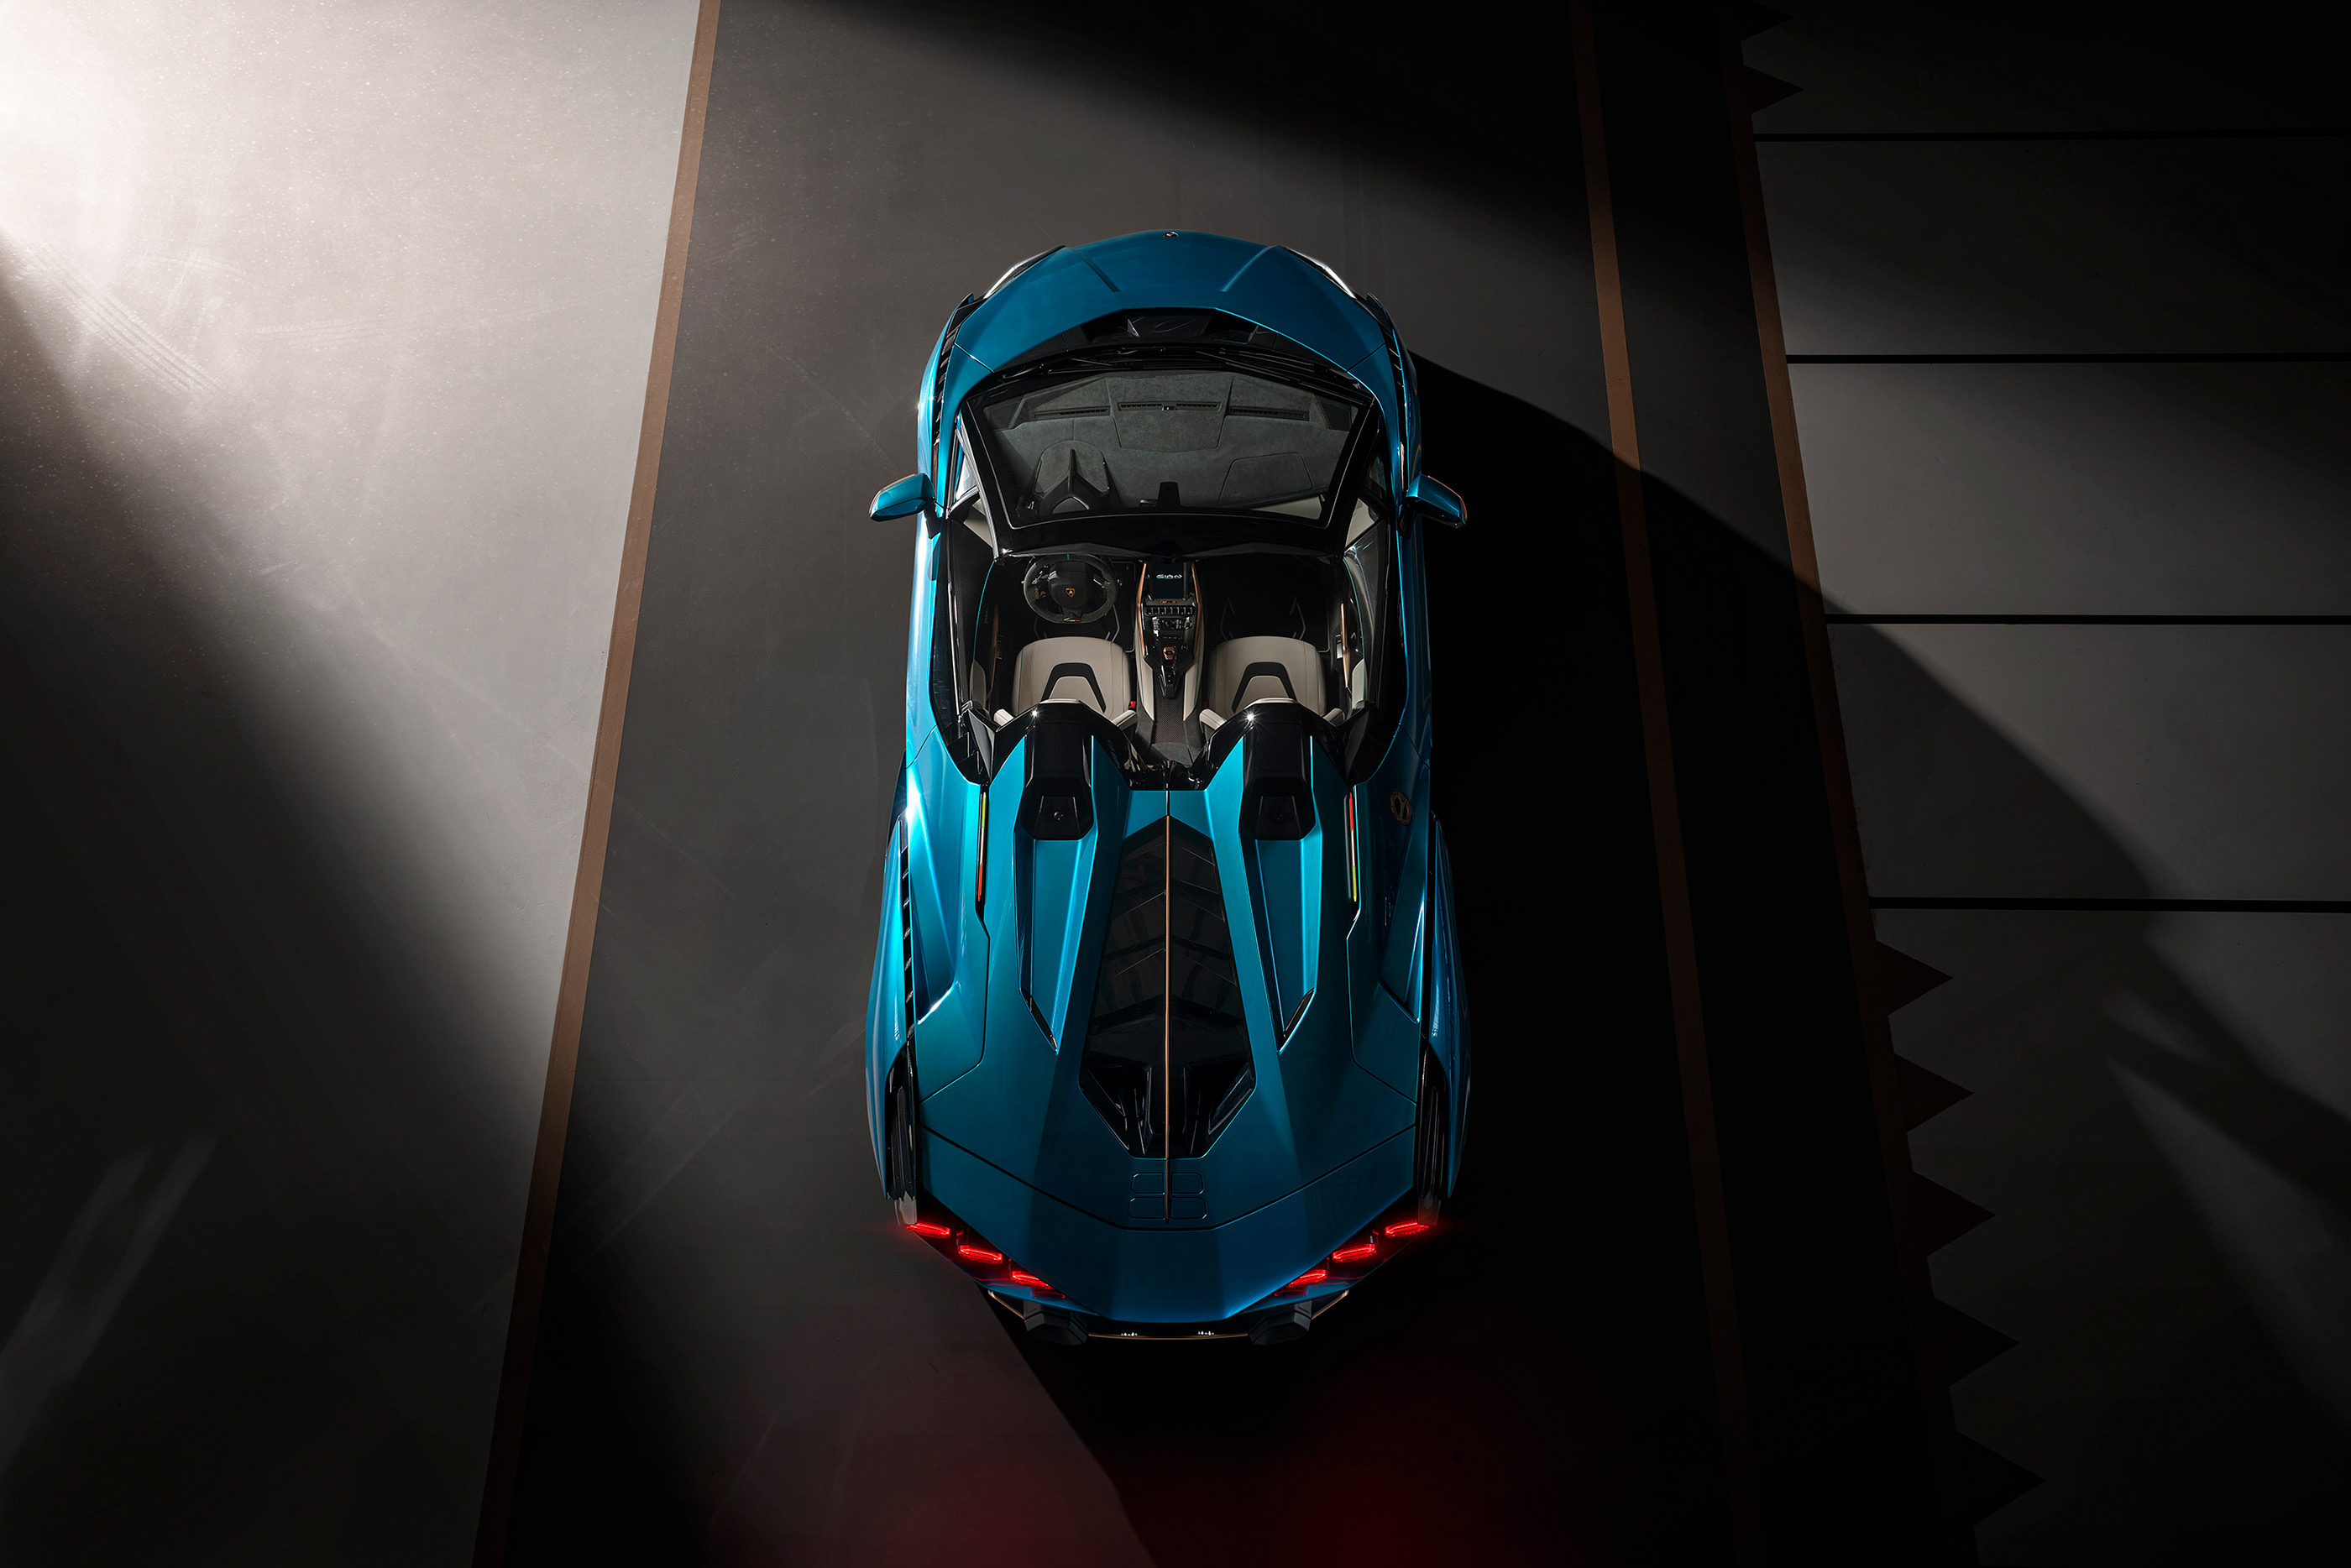 Baixe gratuitamente a imagem Lamborghini, Carro, Super Carro, Veículos, Lamborghini Sián Fkp 37 Roadster na área de trabalho do seu PC